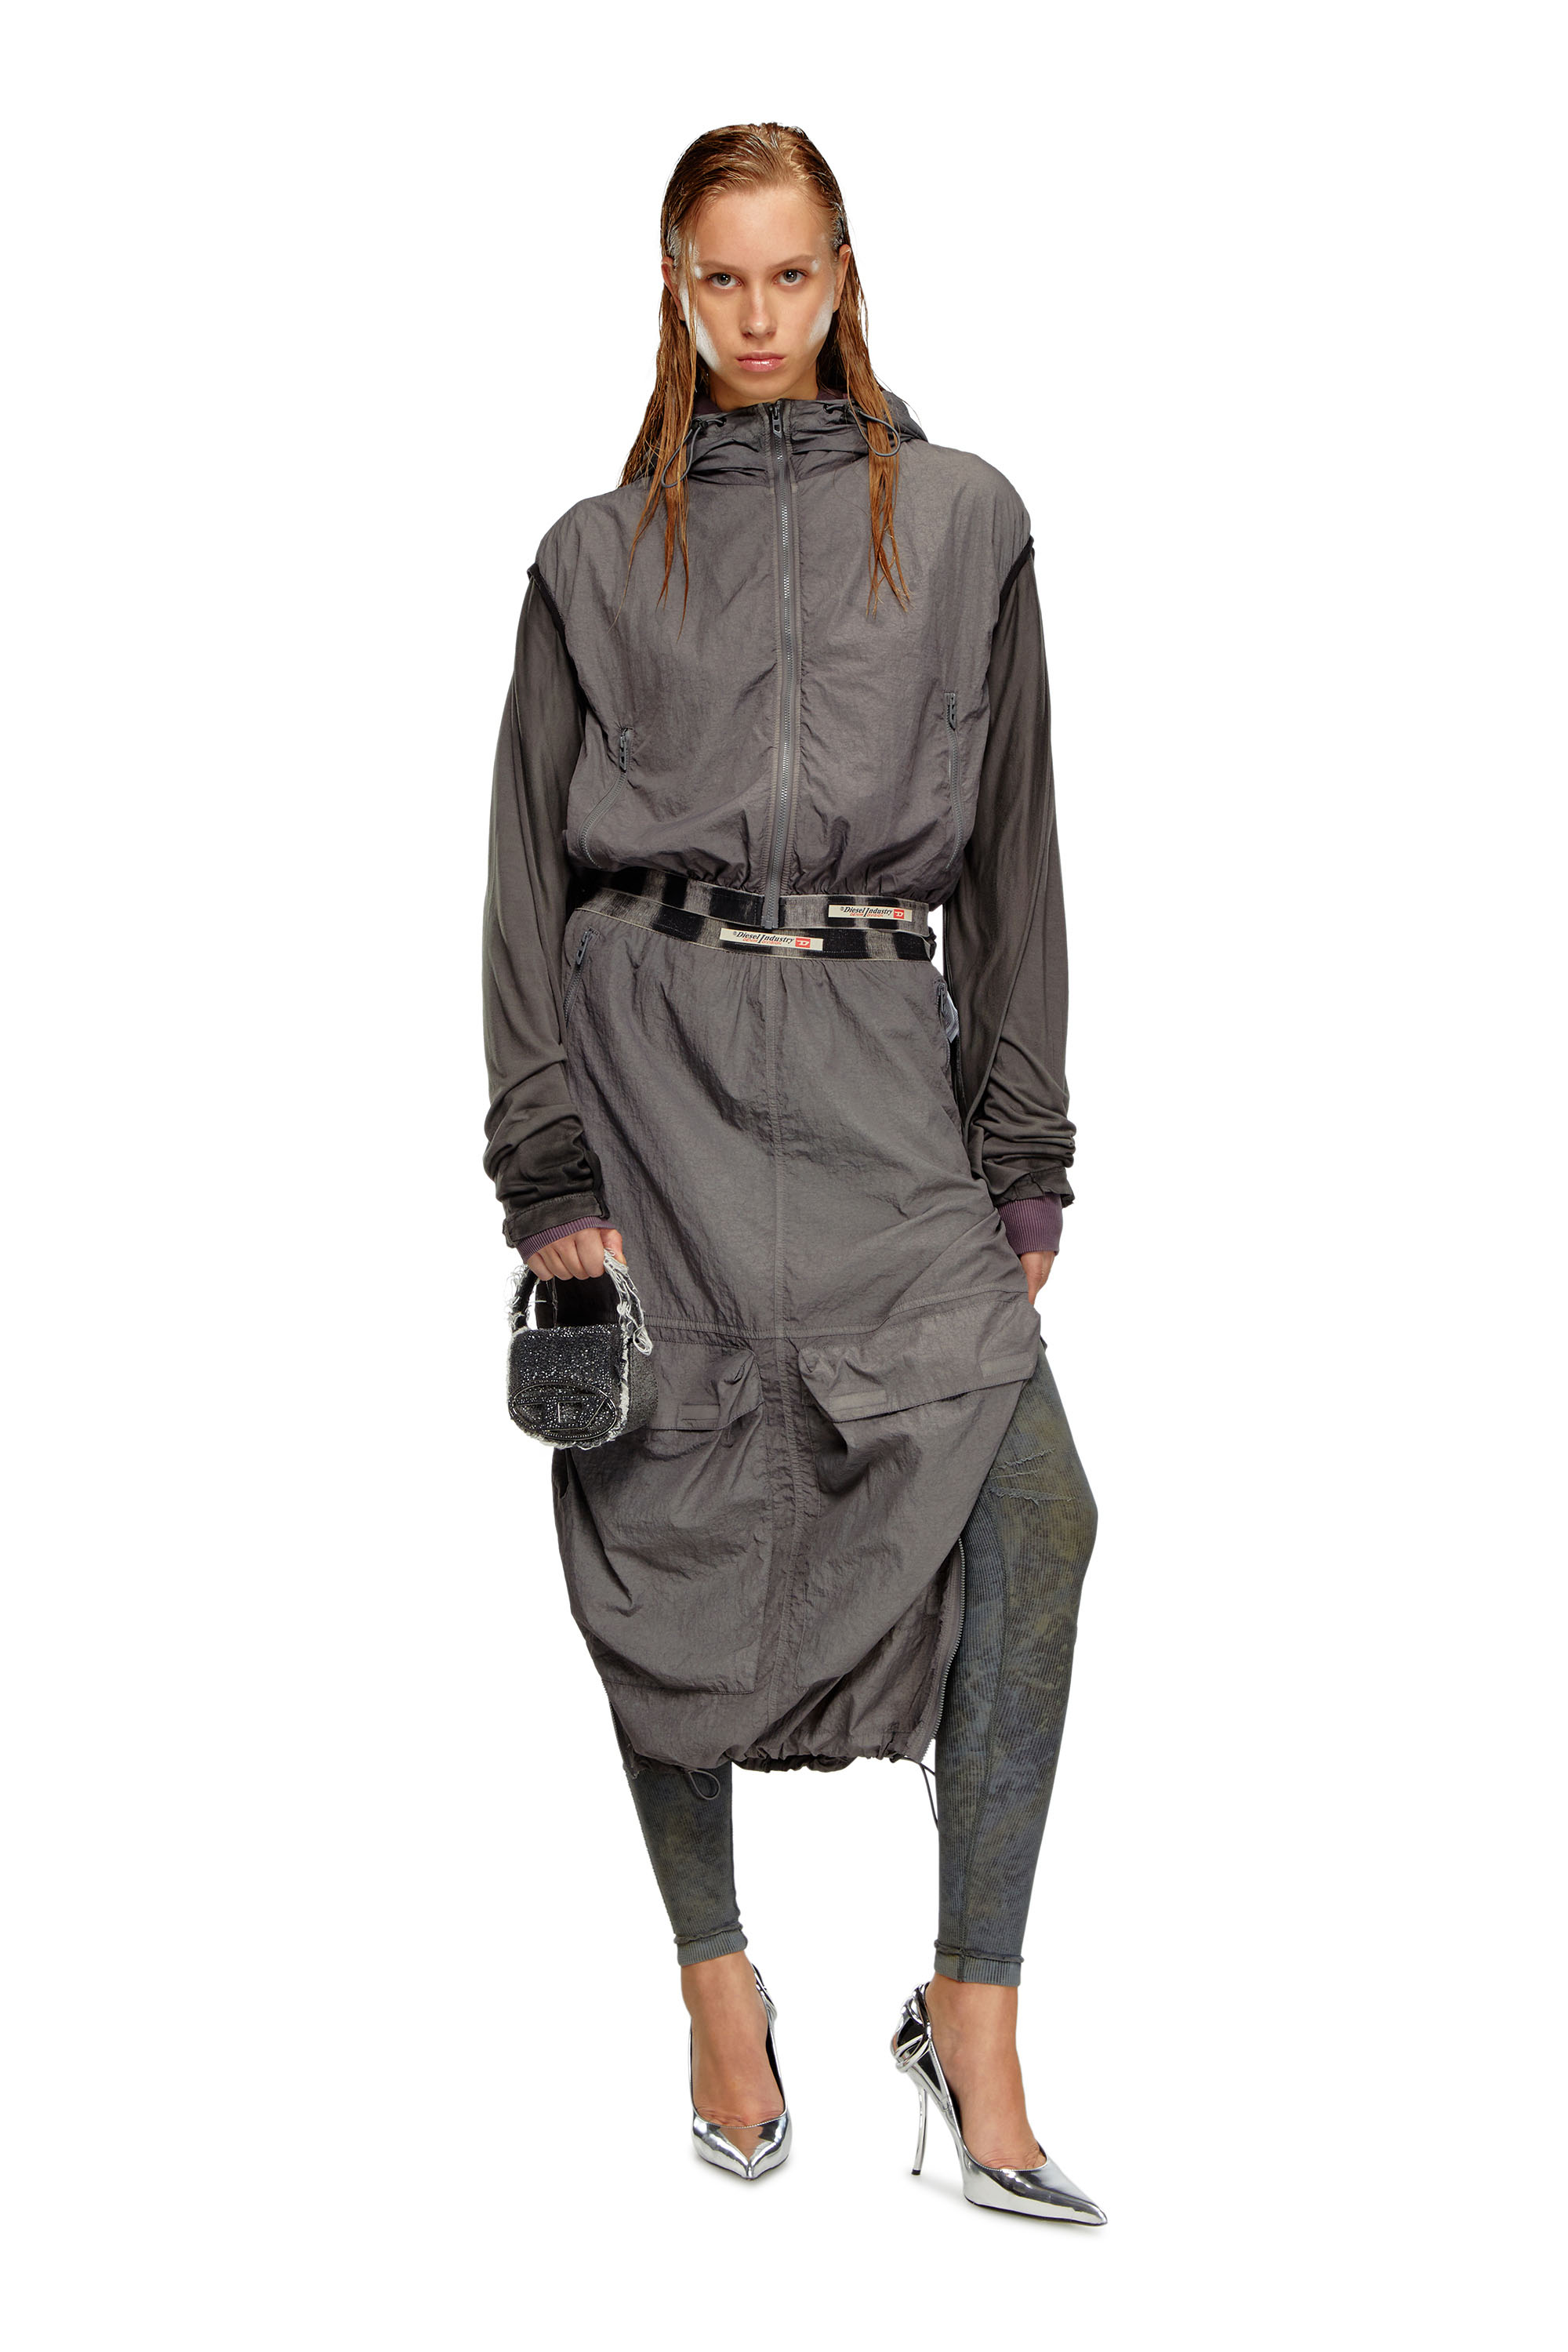 Diesel - G-RANT, Female Hooded vest in recycled nylon in グレー - Image 2